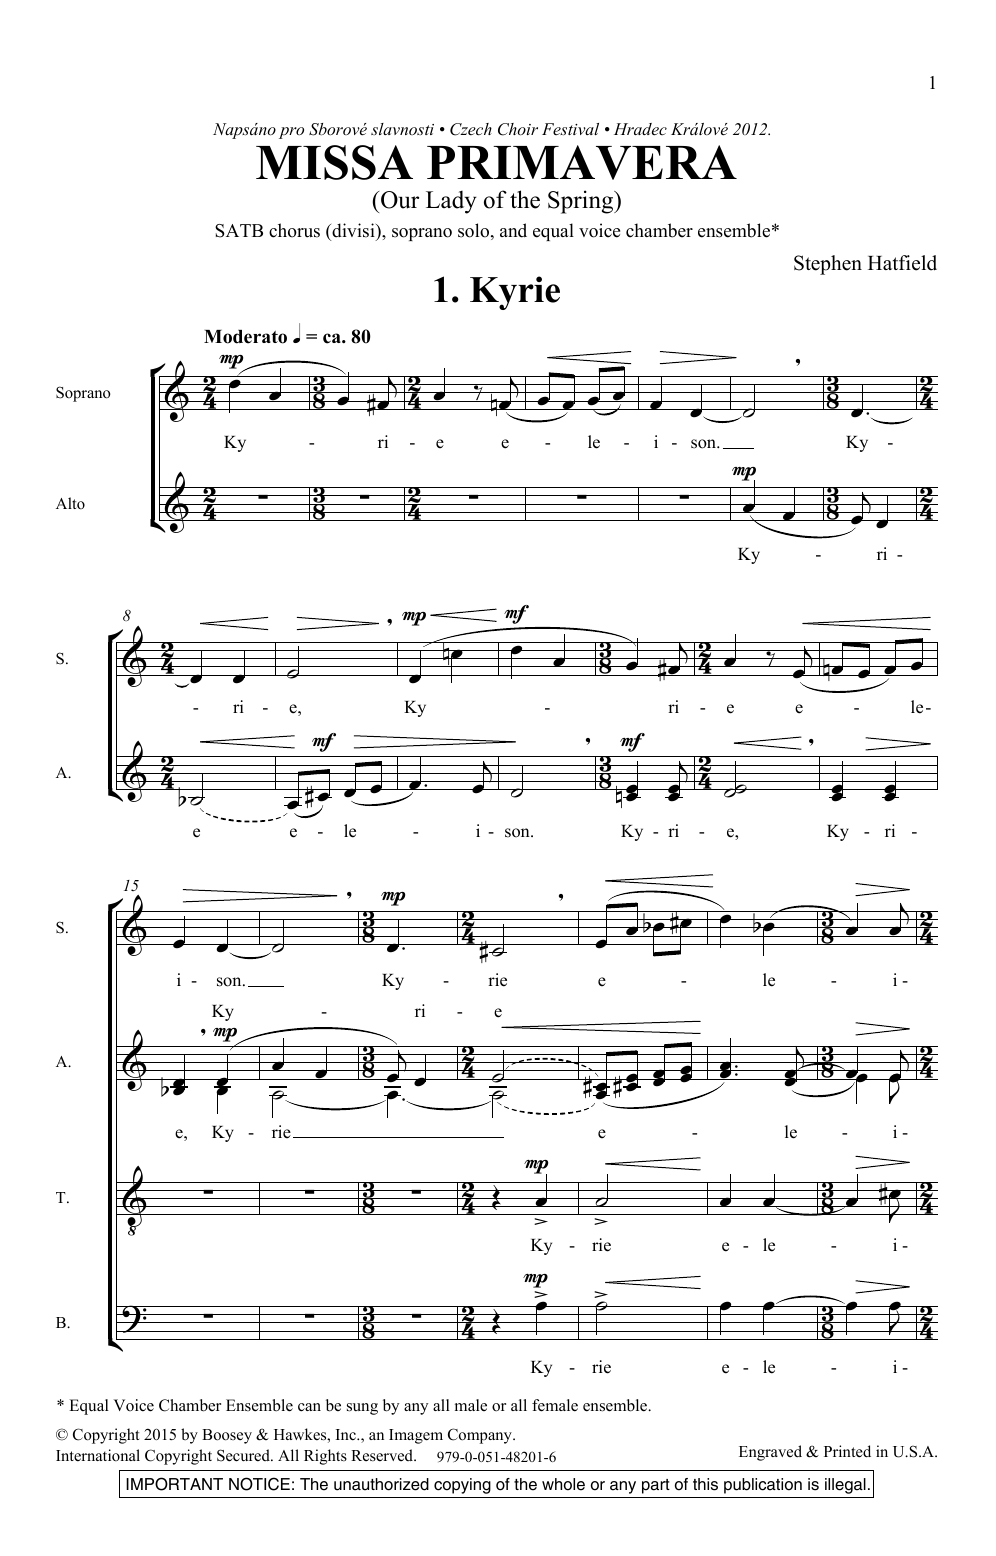 Stephen Hatfield Missa Primavera sheet music notes and chords arranged for SATB Choir